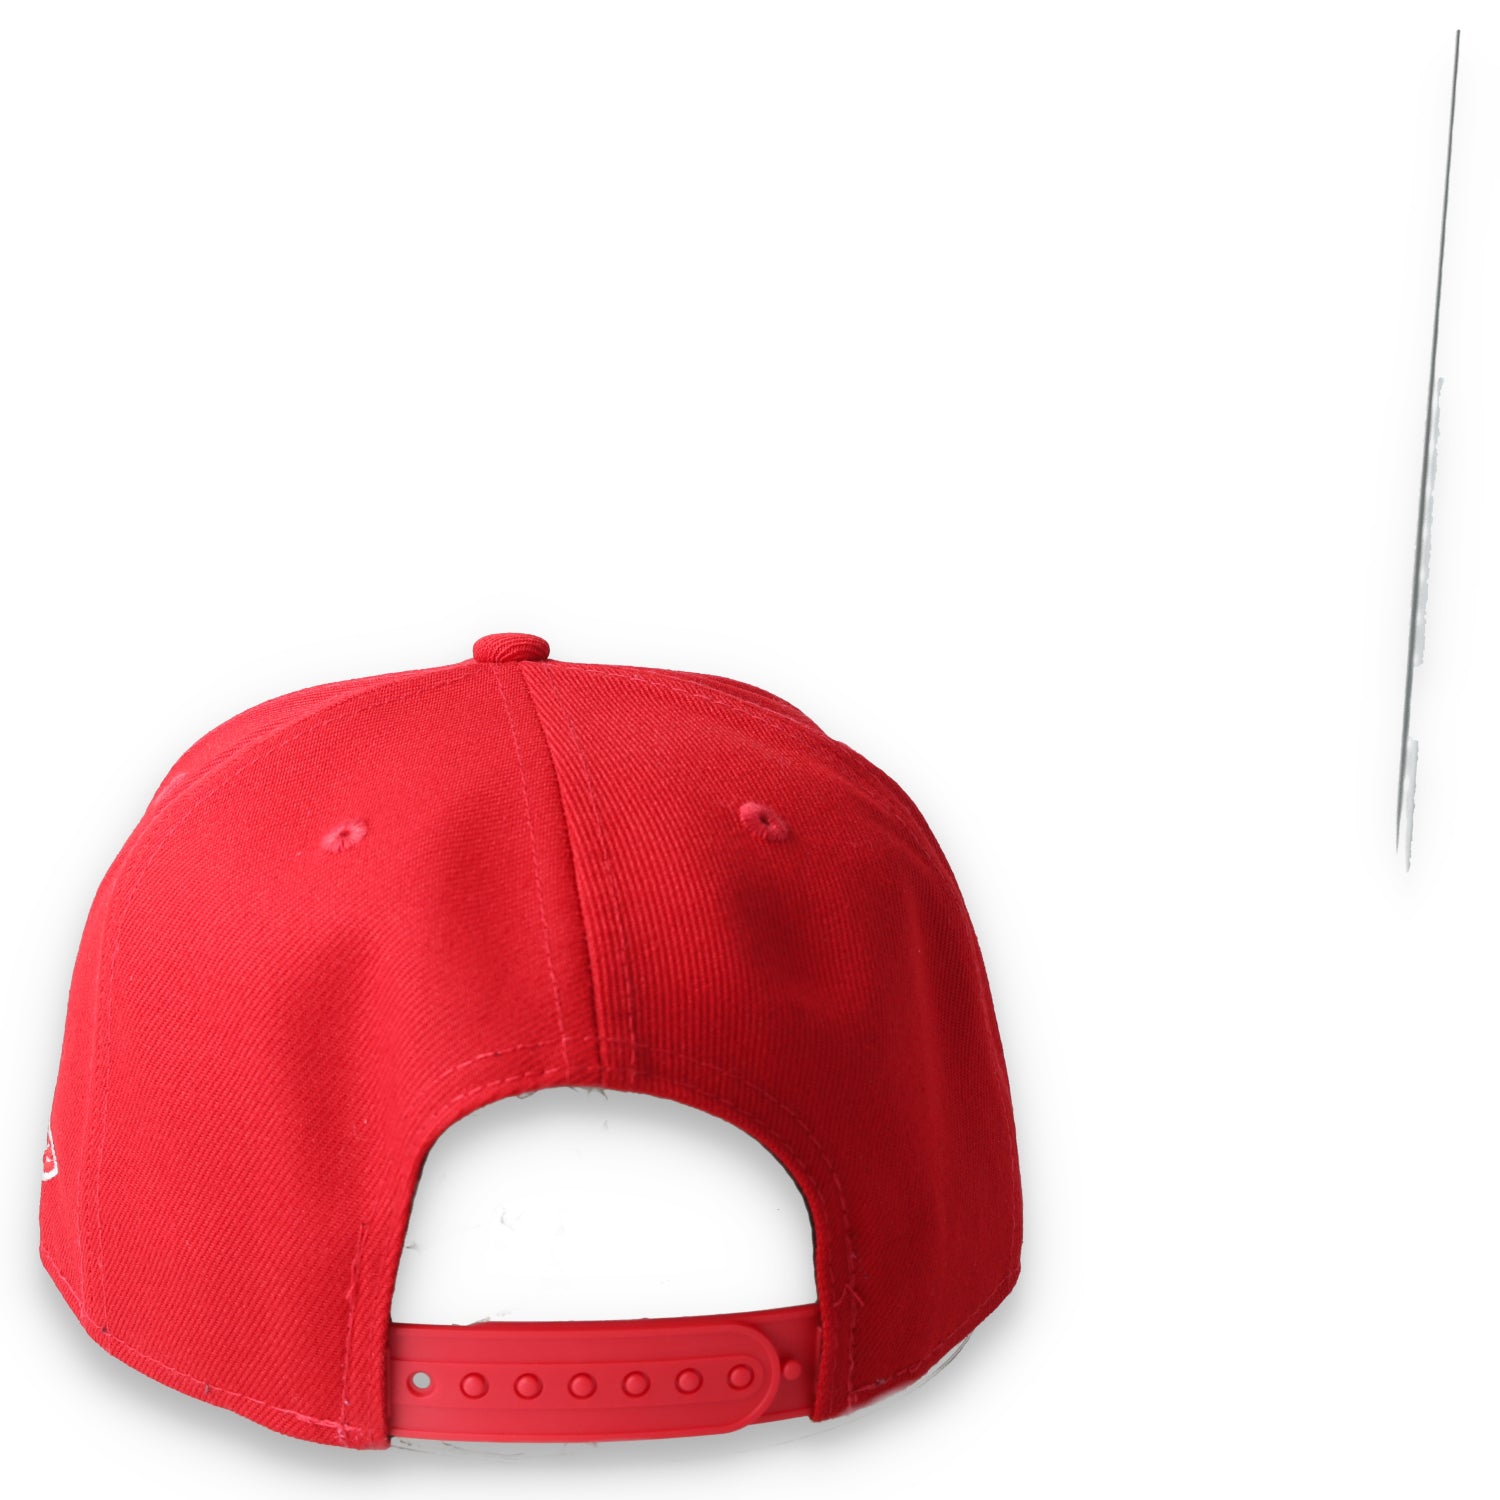 New Era Cincinnati Reds Logo State 9FIFTY Snapback Hat-Red